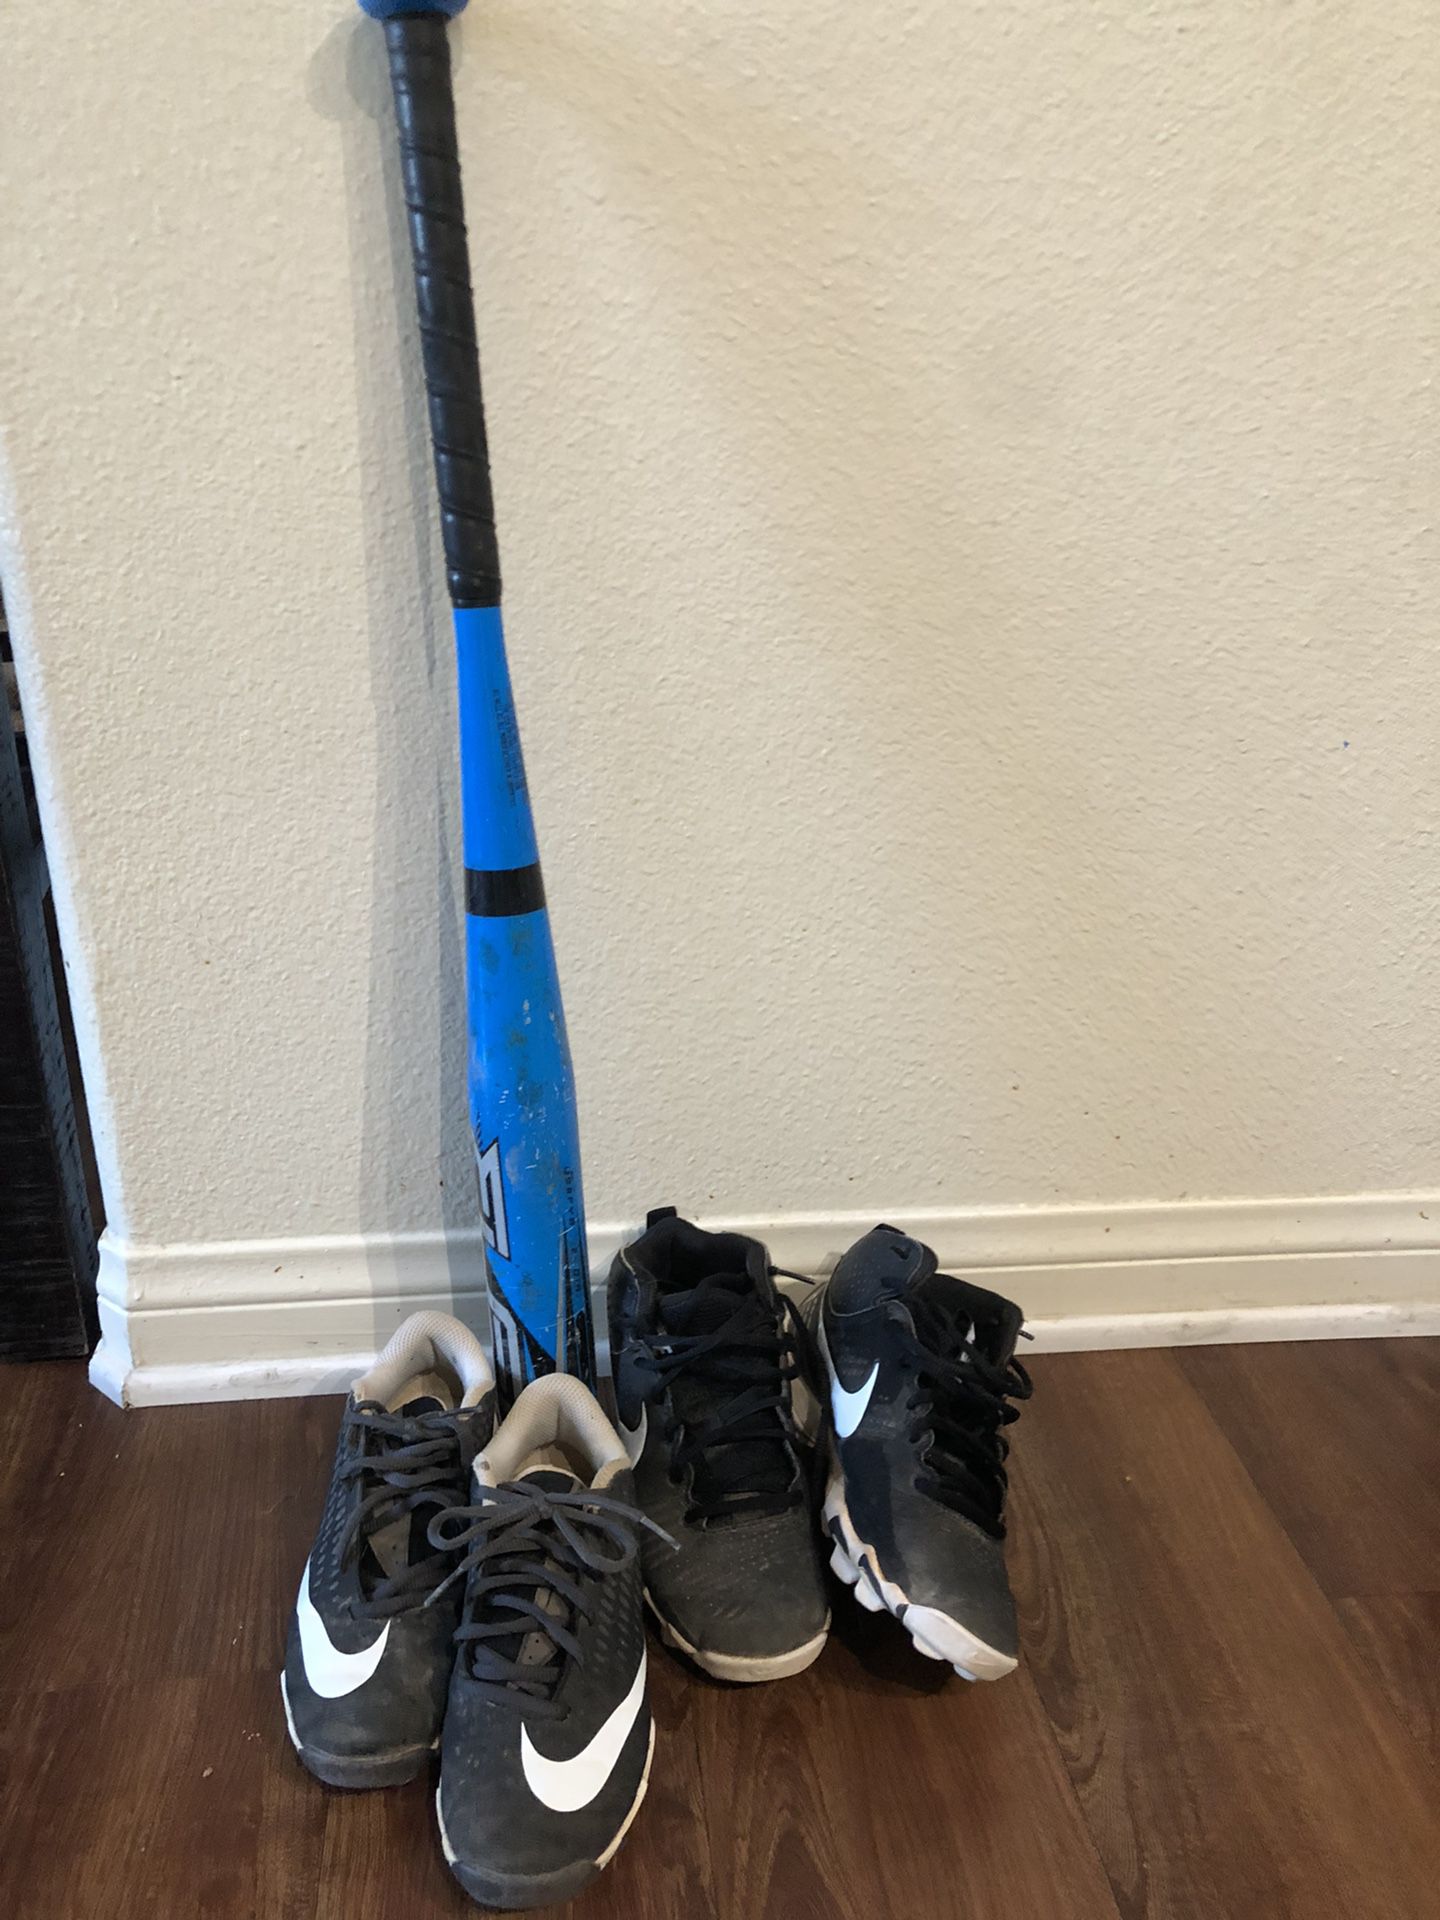 Kids Baseball Shoes And Bat (used)